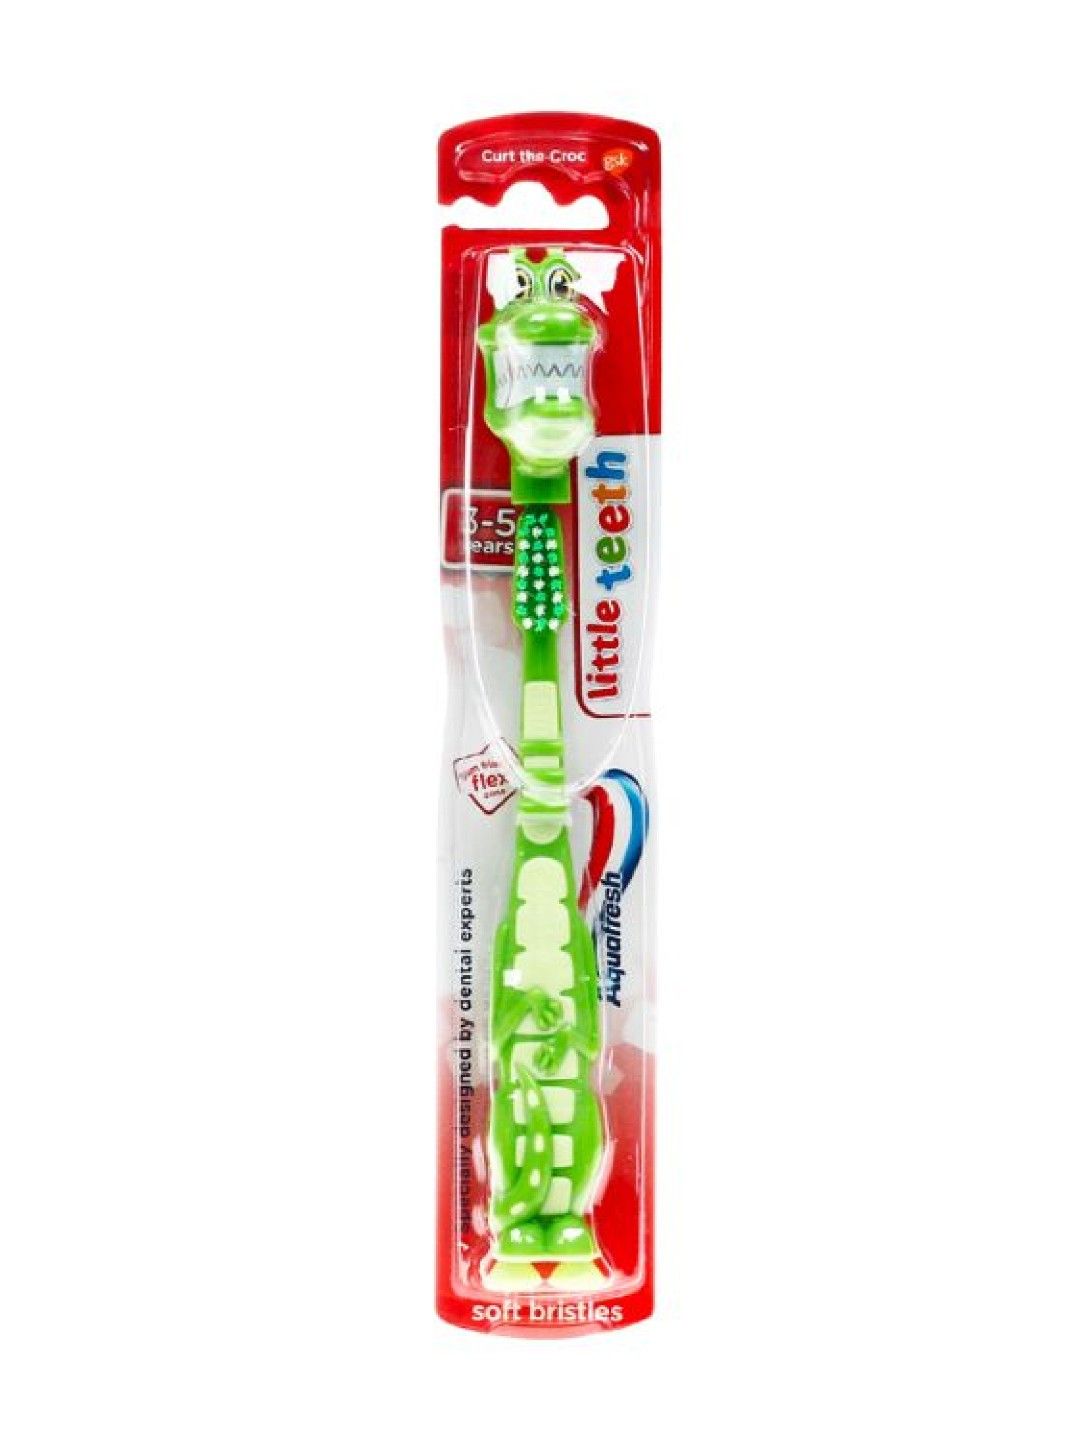 Aquafresh Little Teeth Toothbrush (1 pc)